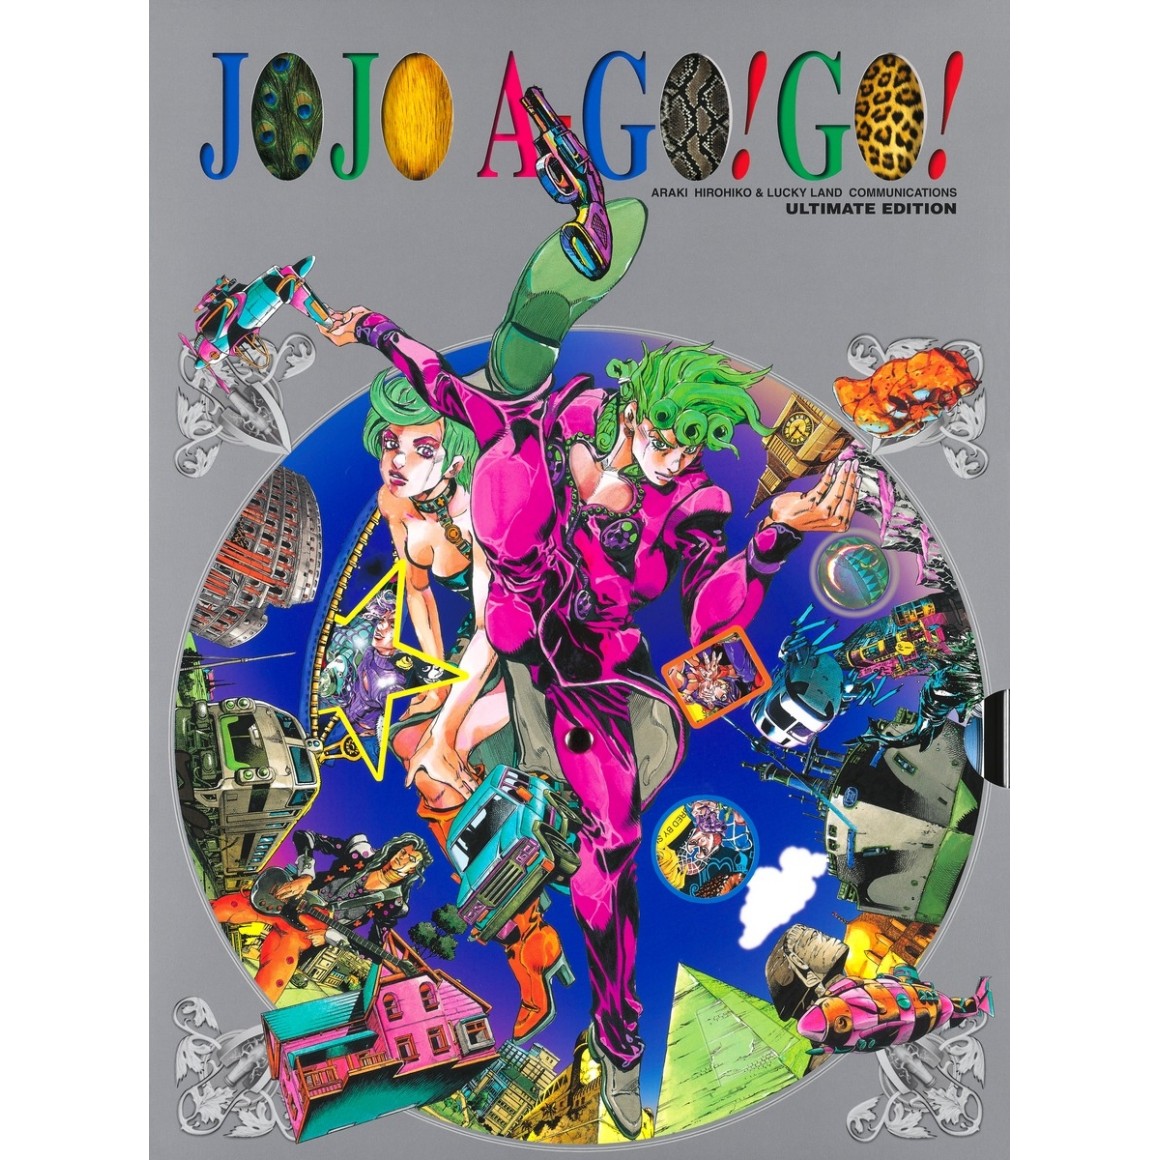 JoJo's Bizarre Adventure / Jojo no Kimyou na Bouken Vol.30 - Vol.39 Set  [JAPANESE EDITION]